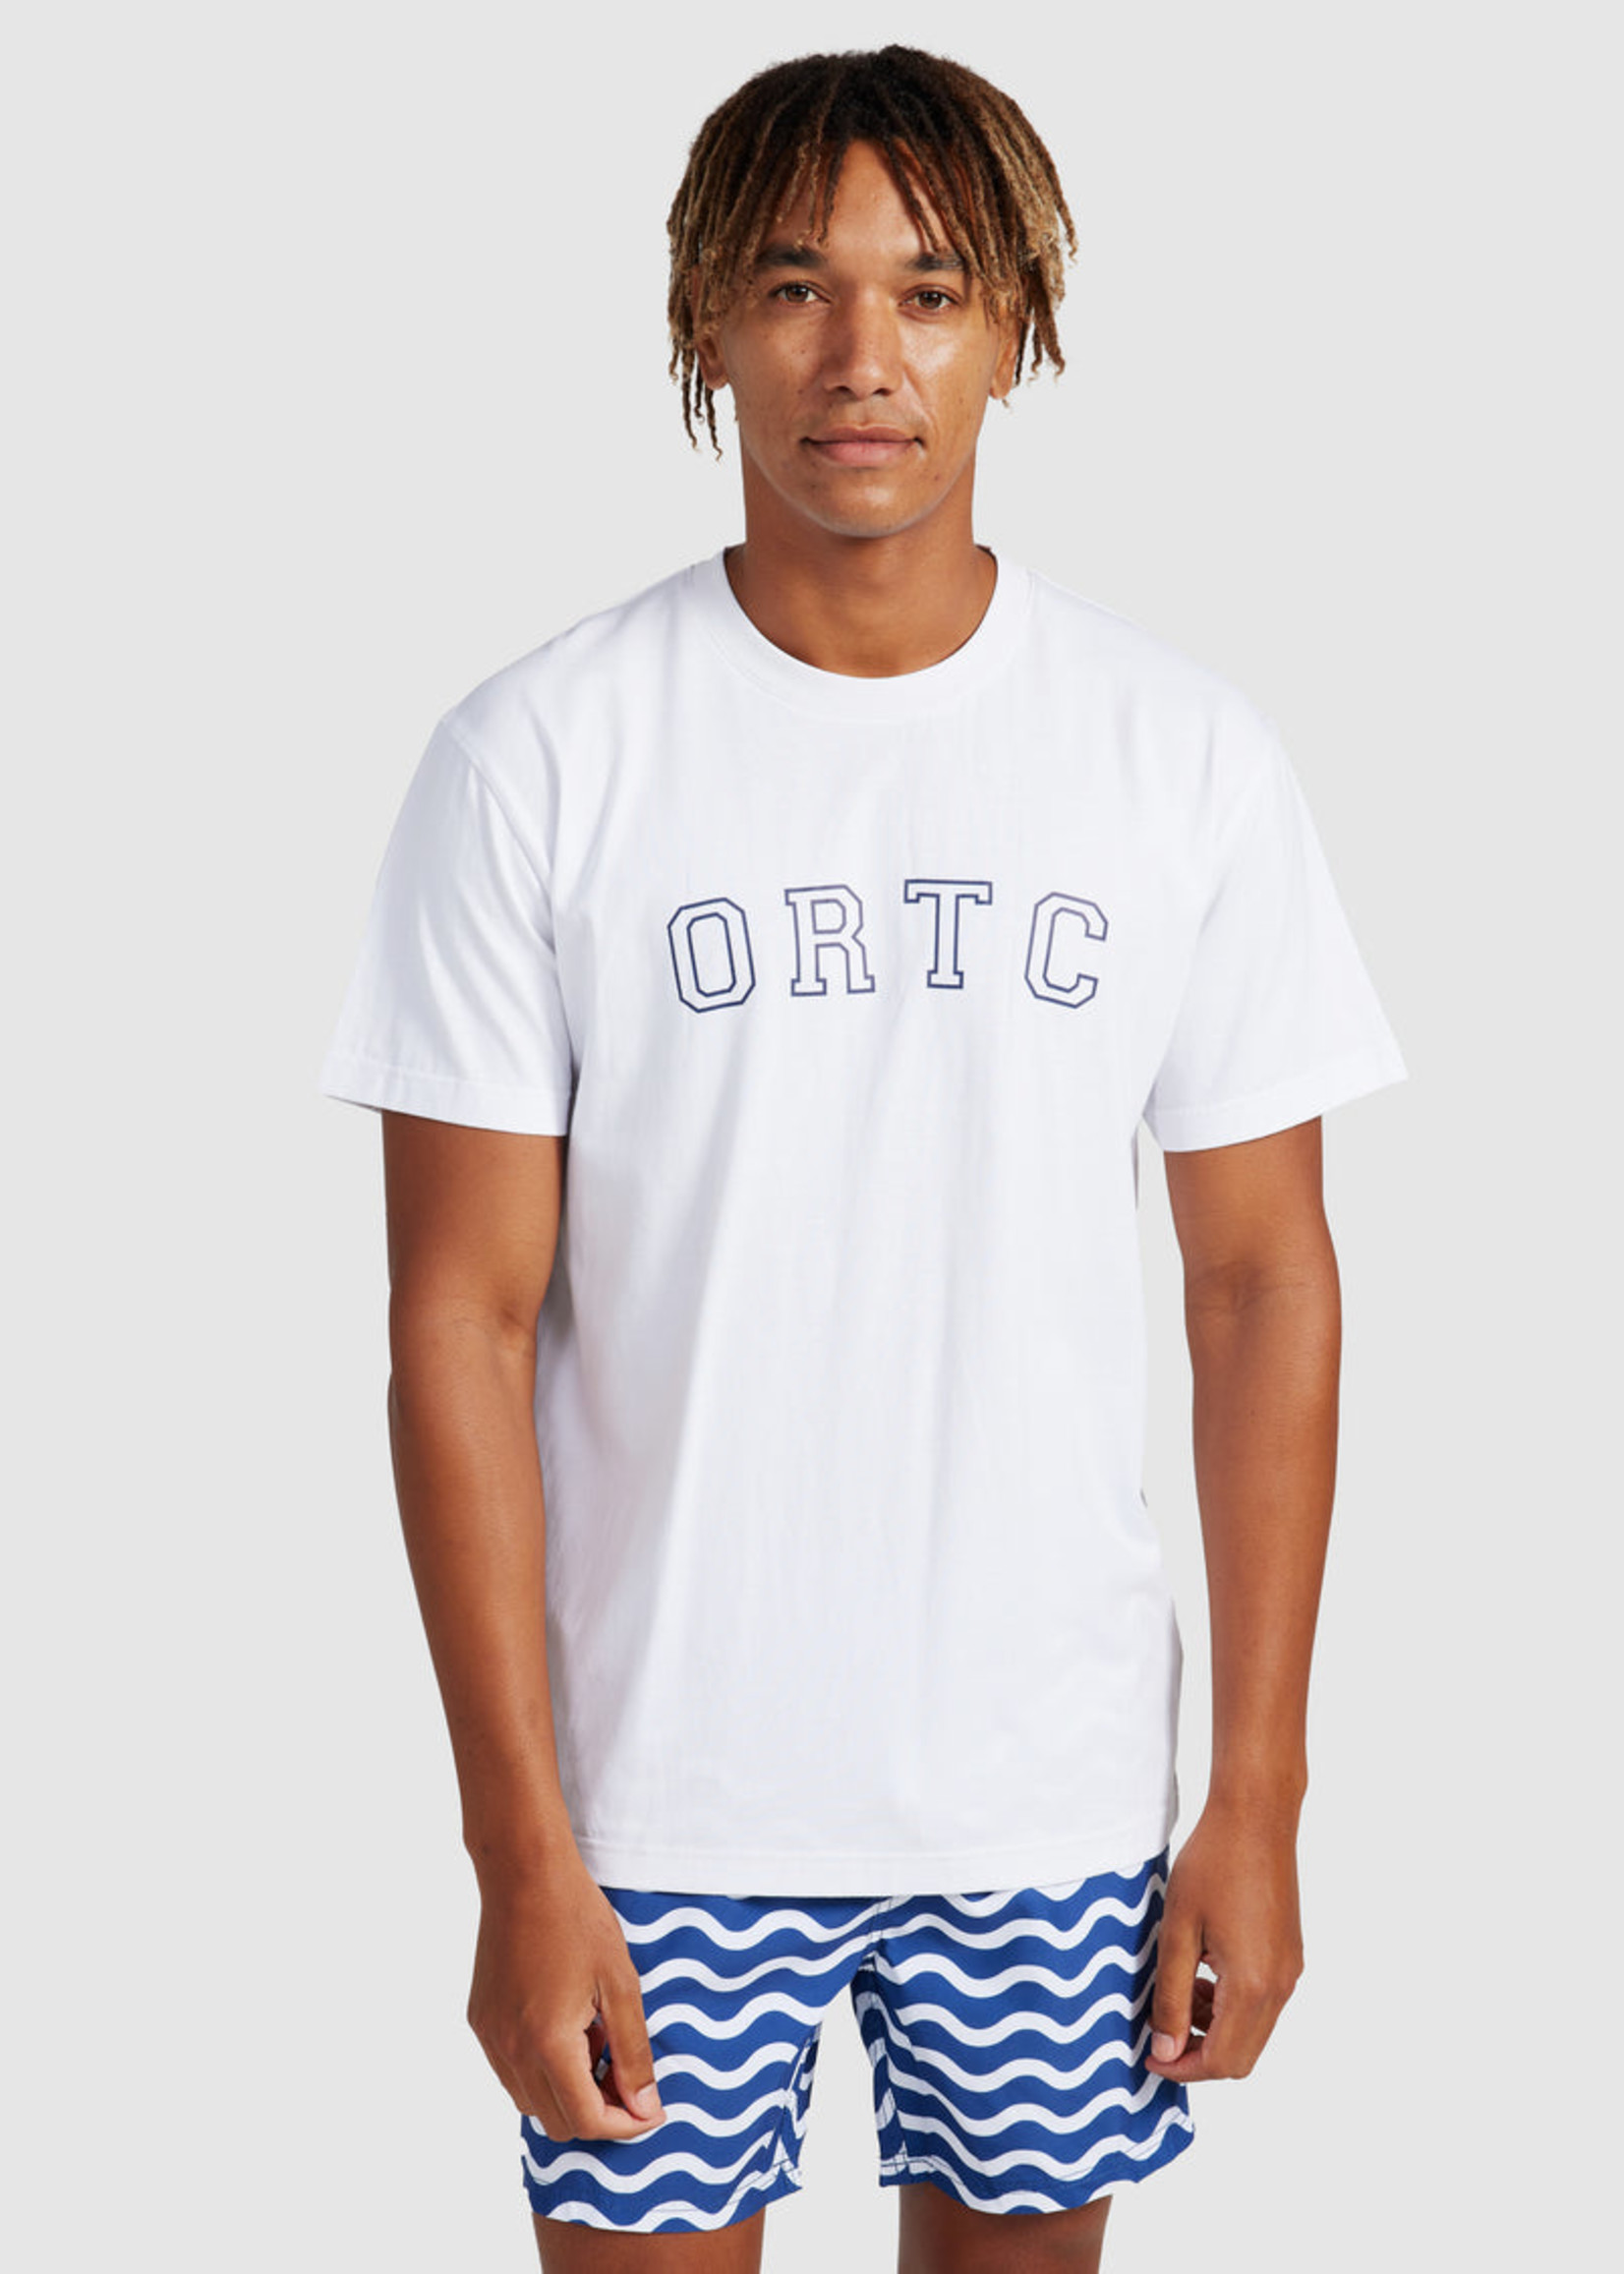 ORTC College T shirt (White)